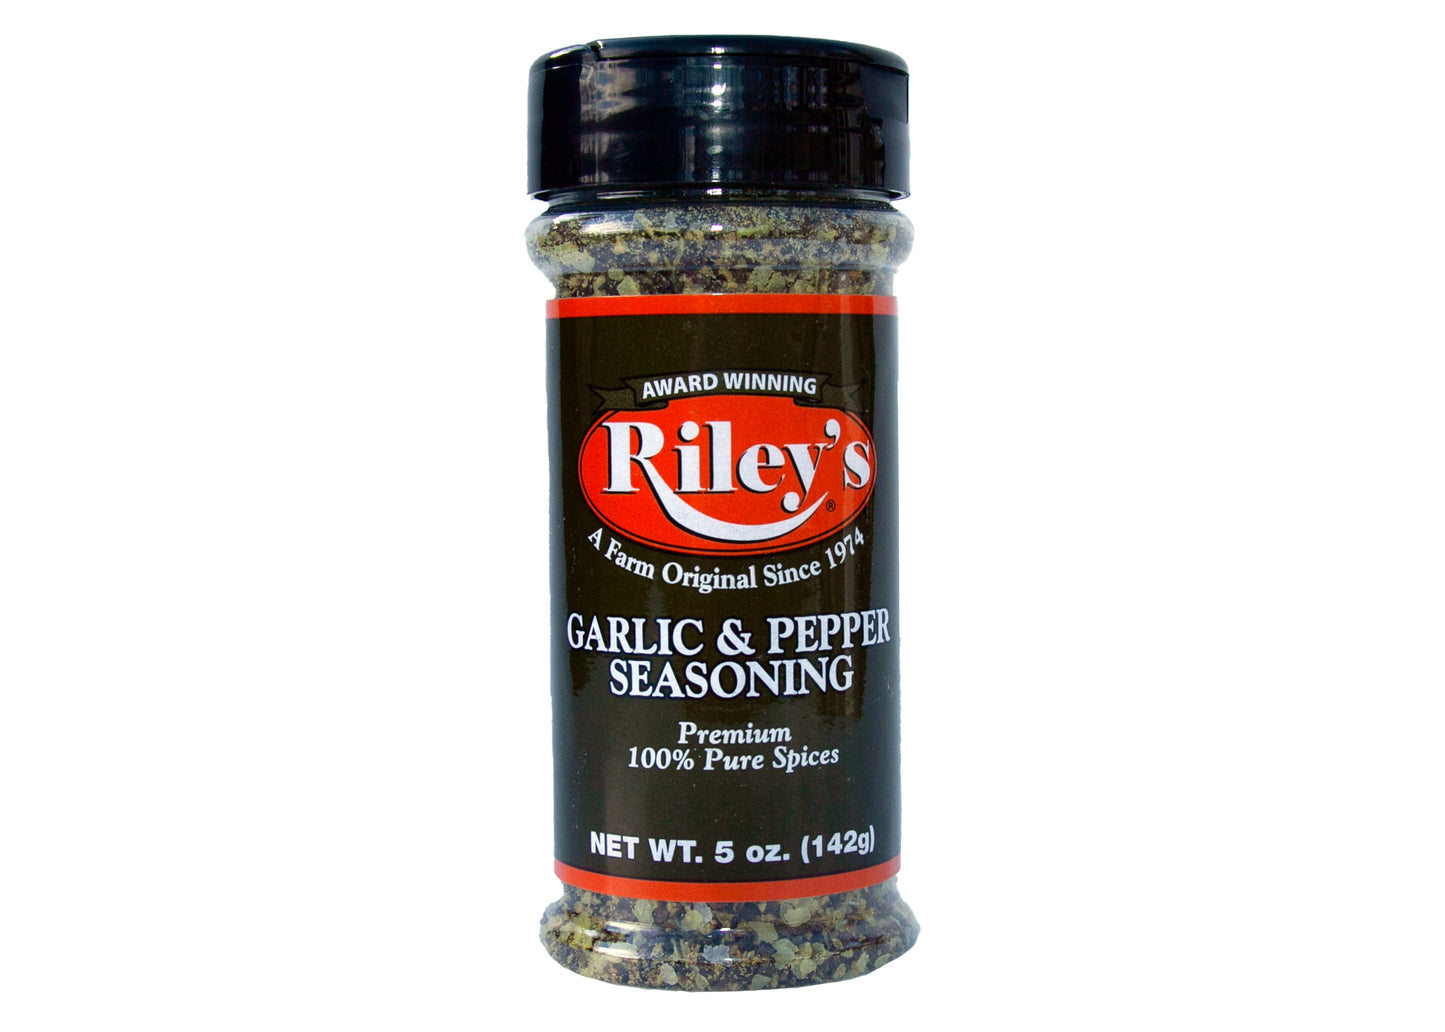 Garlic & Pepper